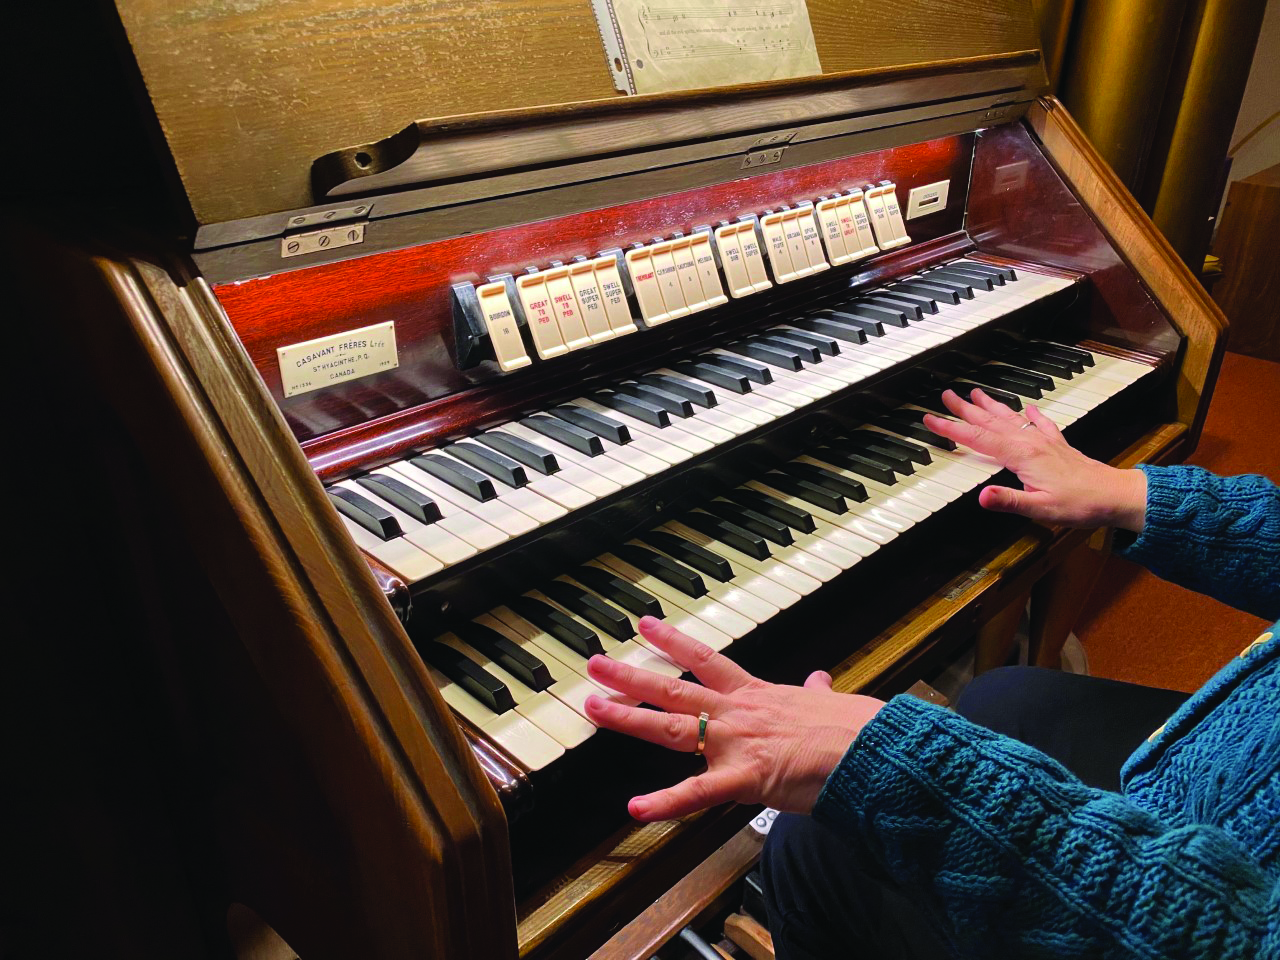 Pipes, please: Church restores historic organ